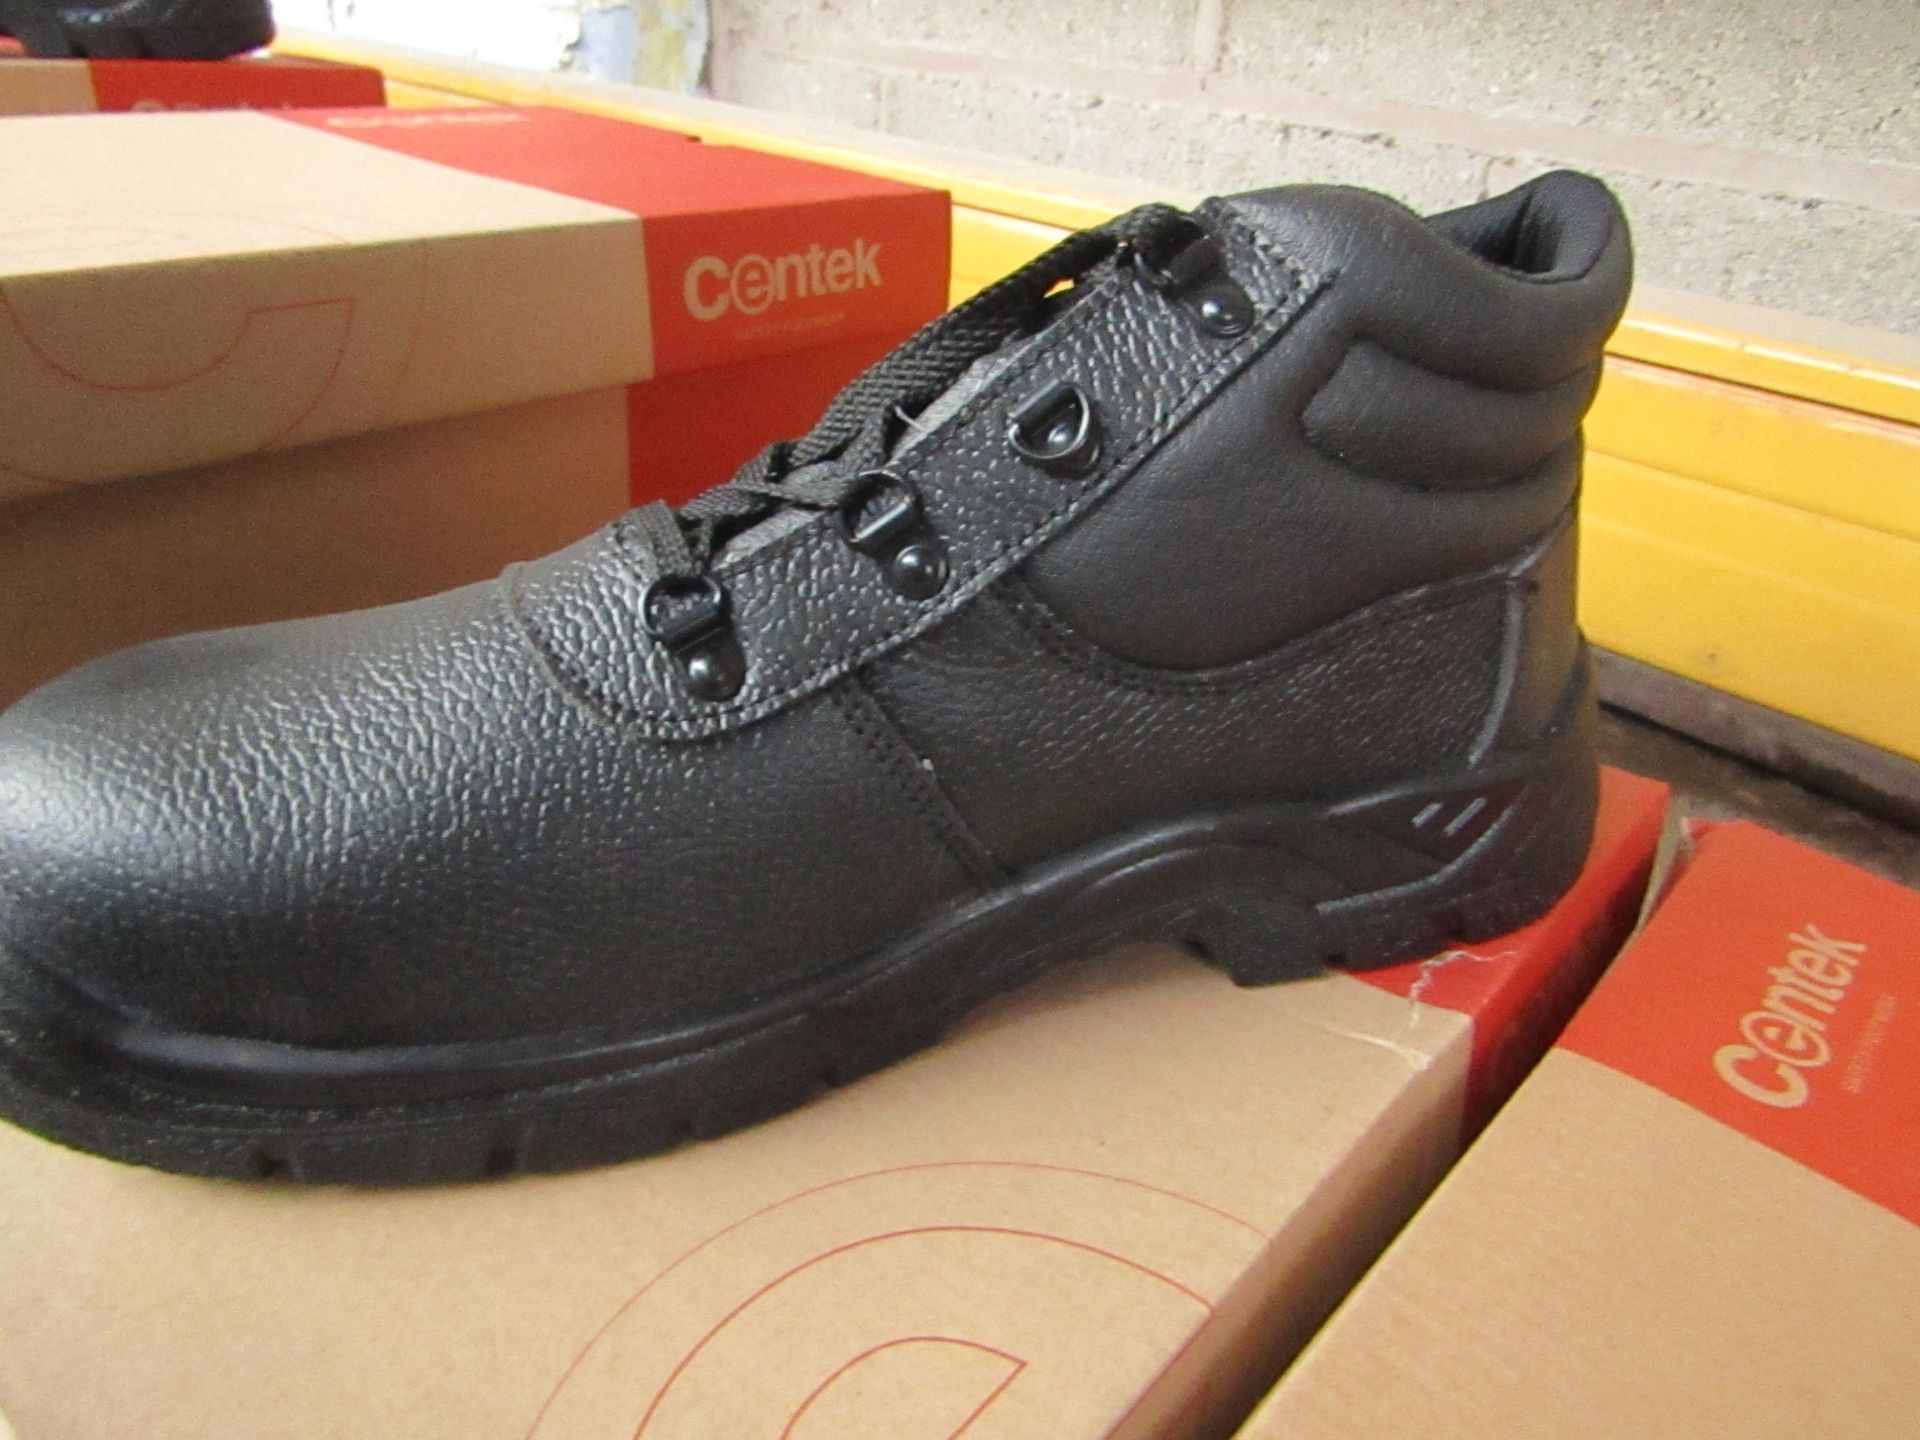 Centek Black Steel Toe Cap Boot size 10 New & Boxed.